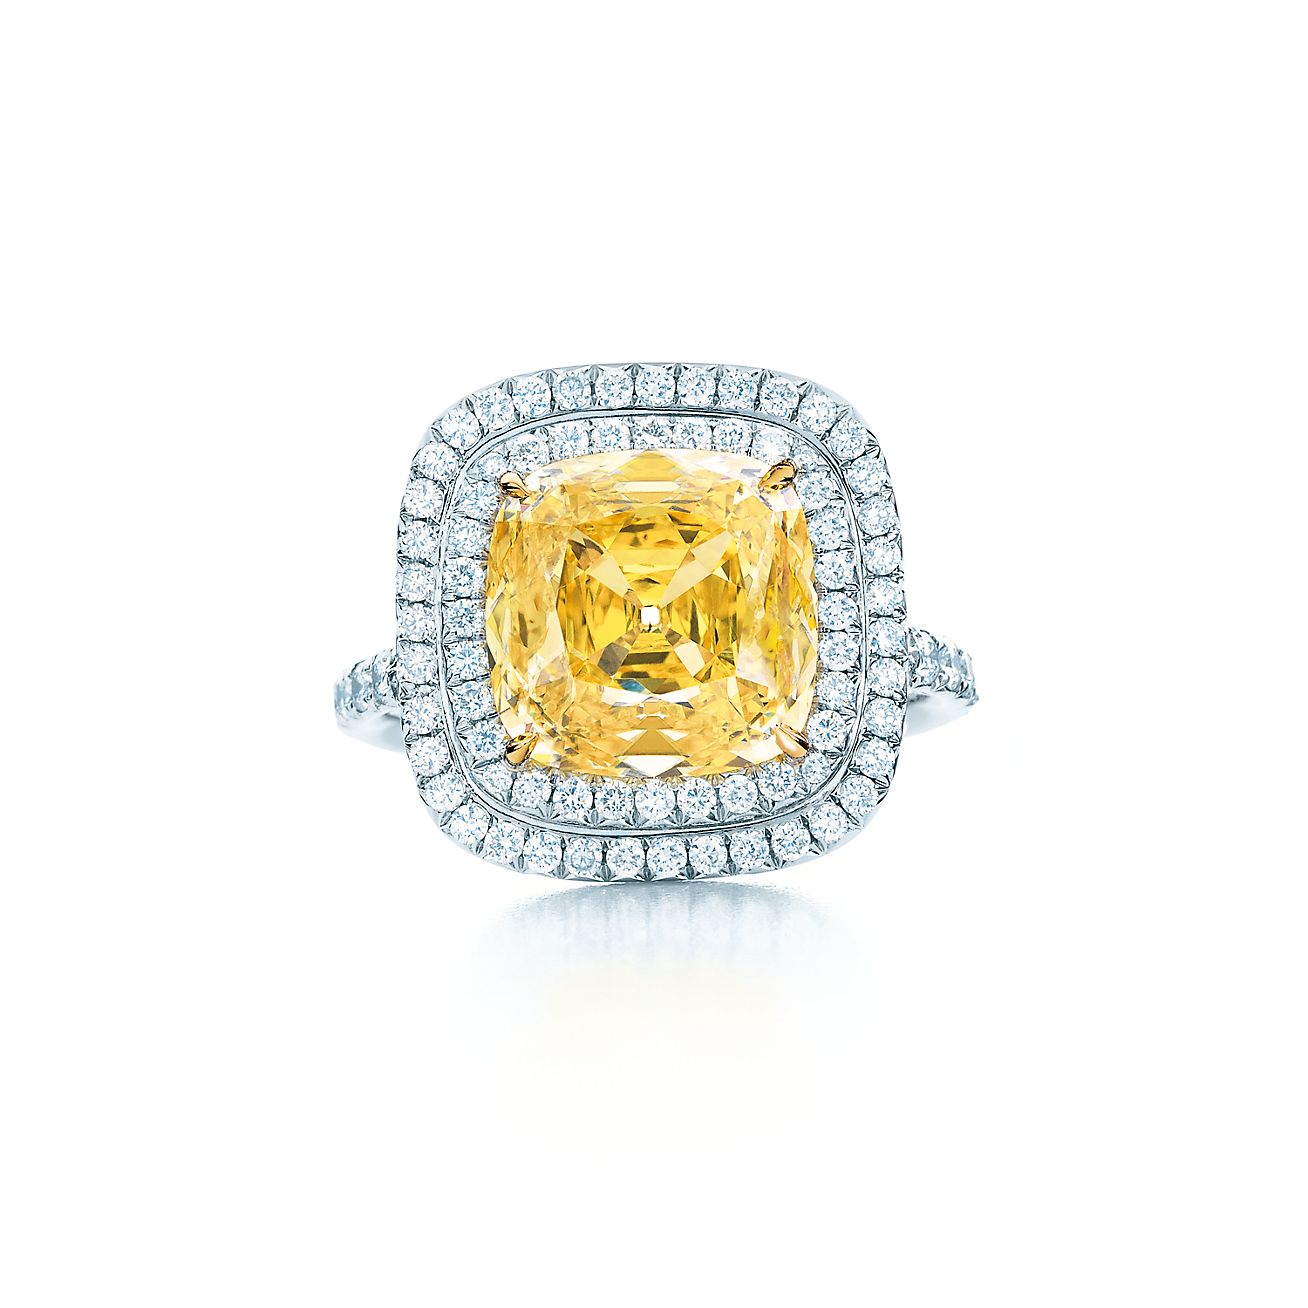 Square yellow diamond ring with white 